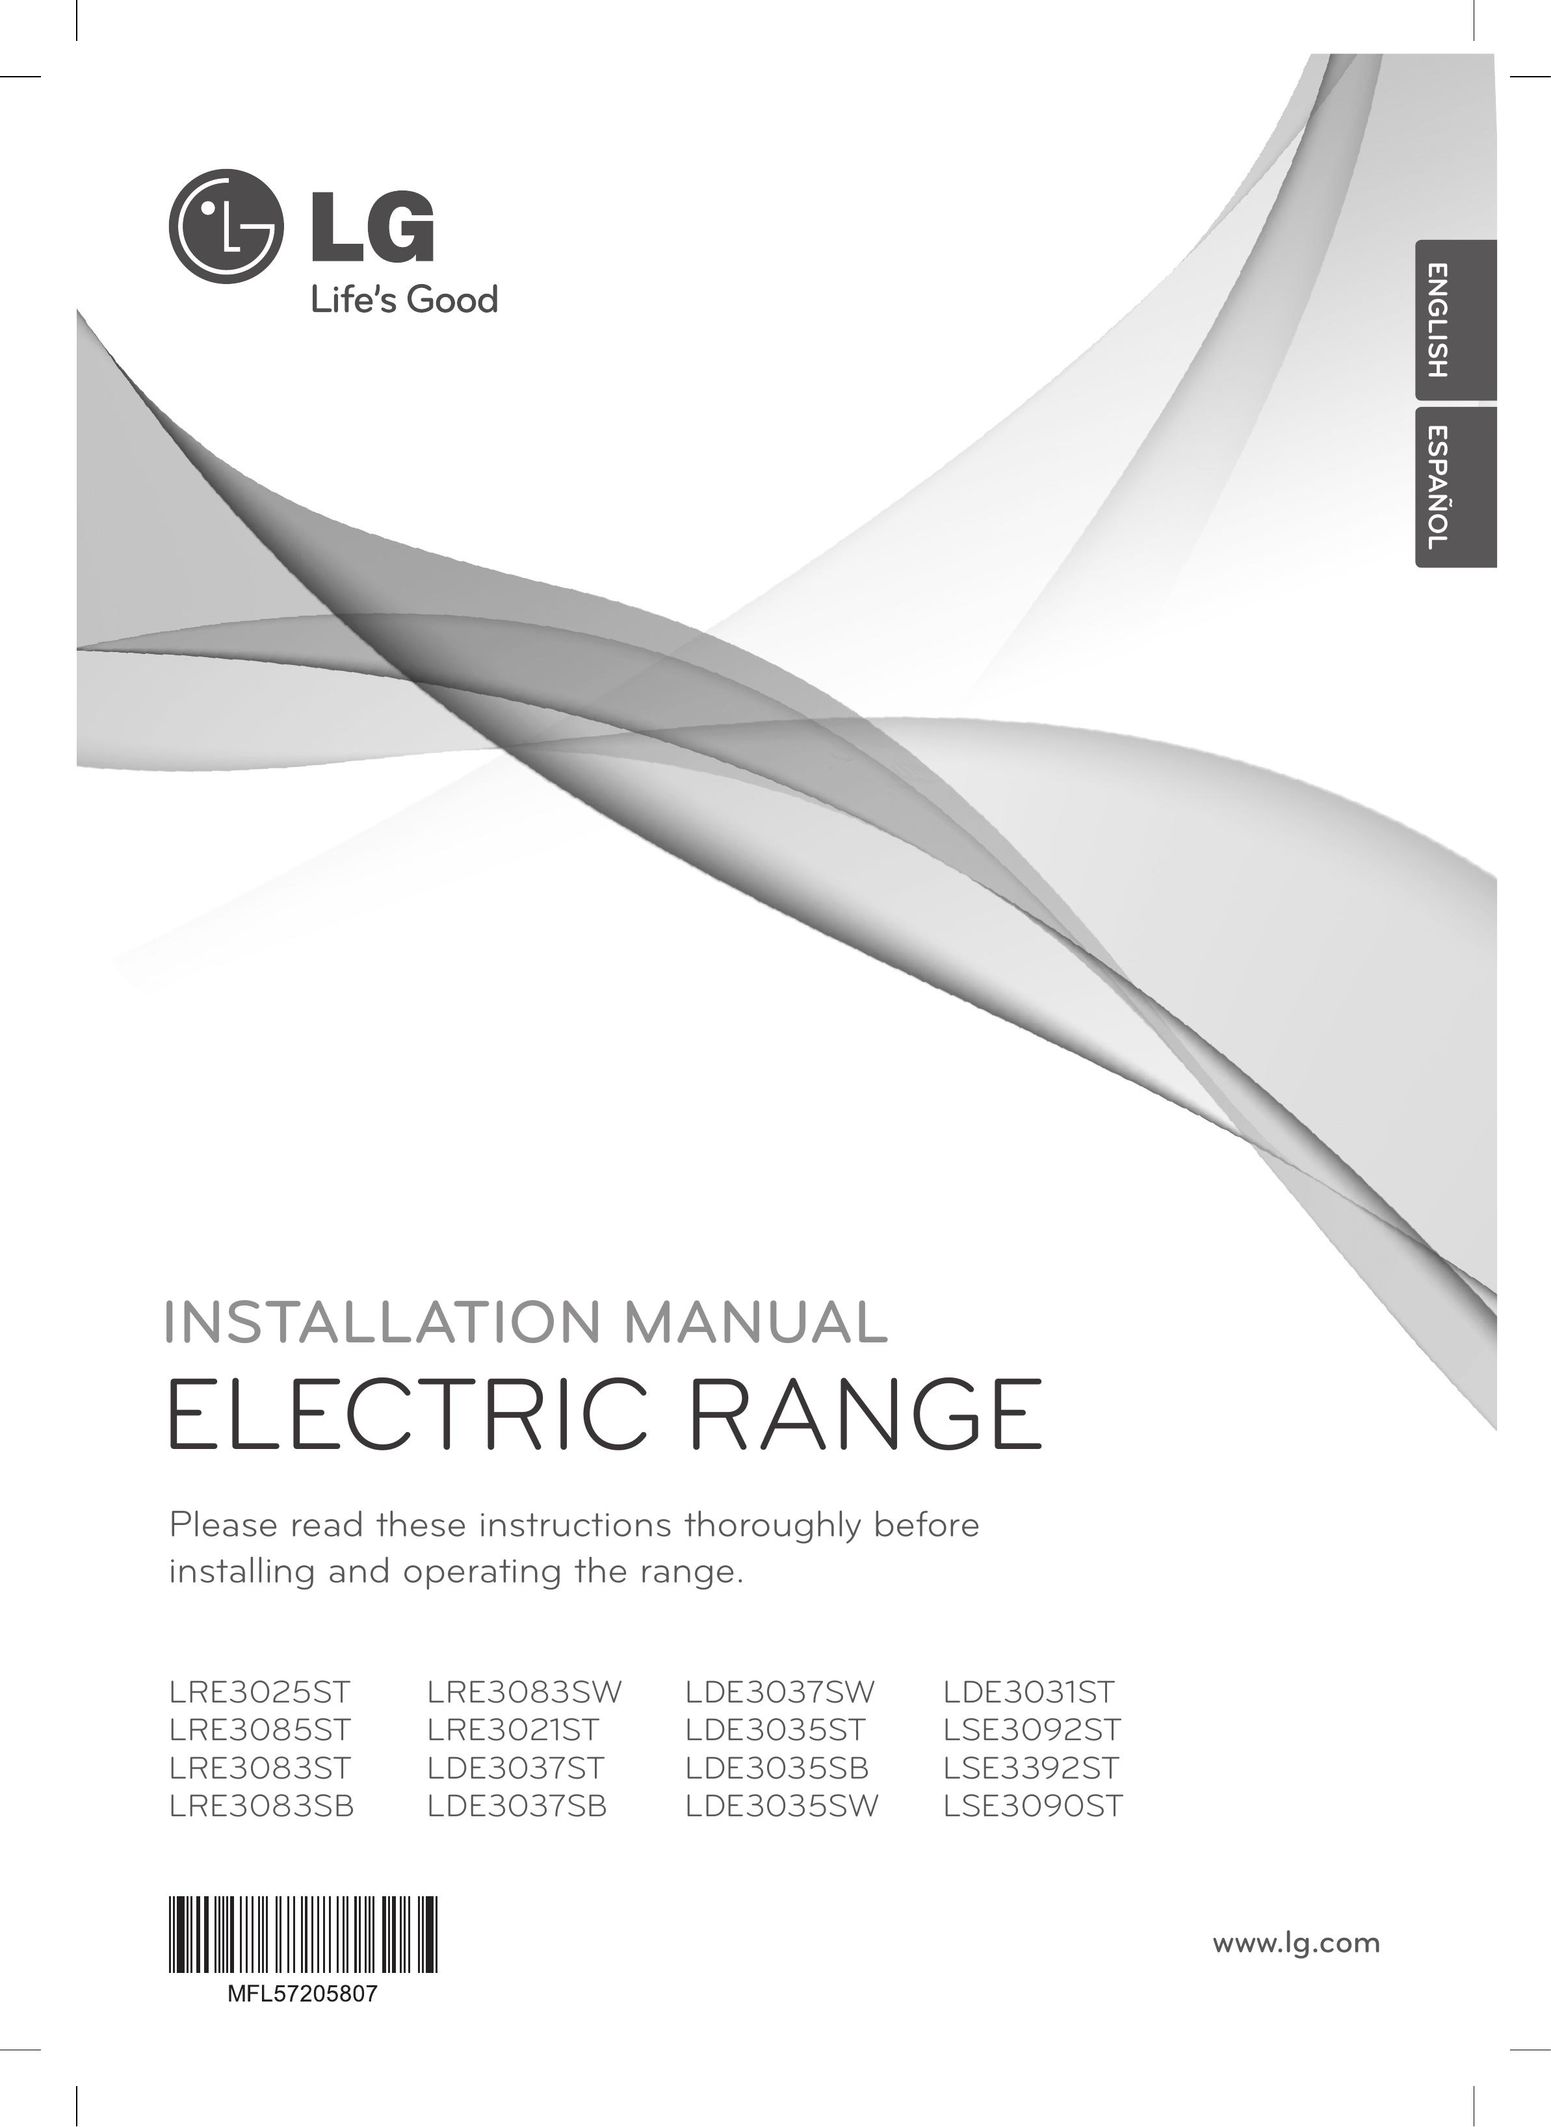 LG Electronics LDE3035SB Range User Manual